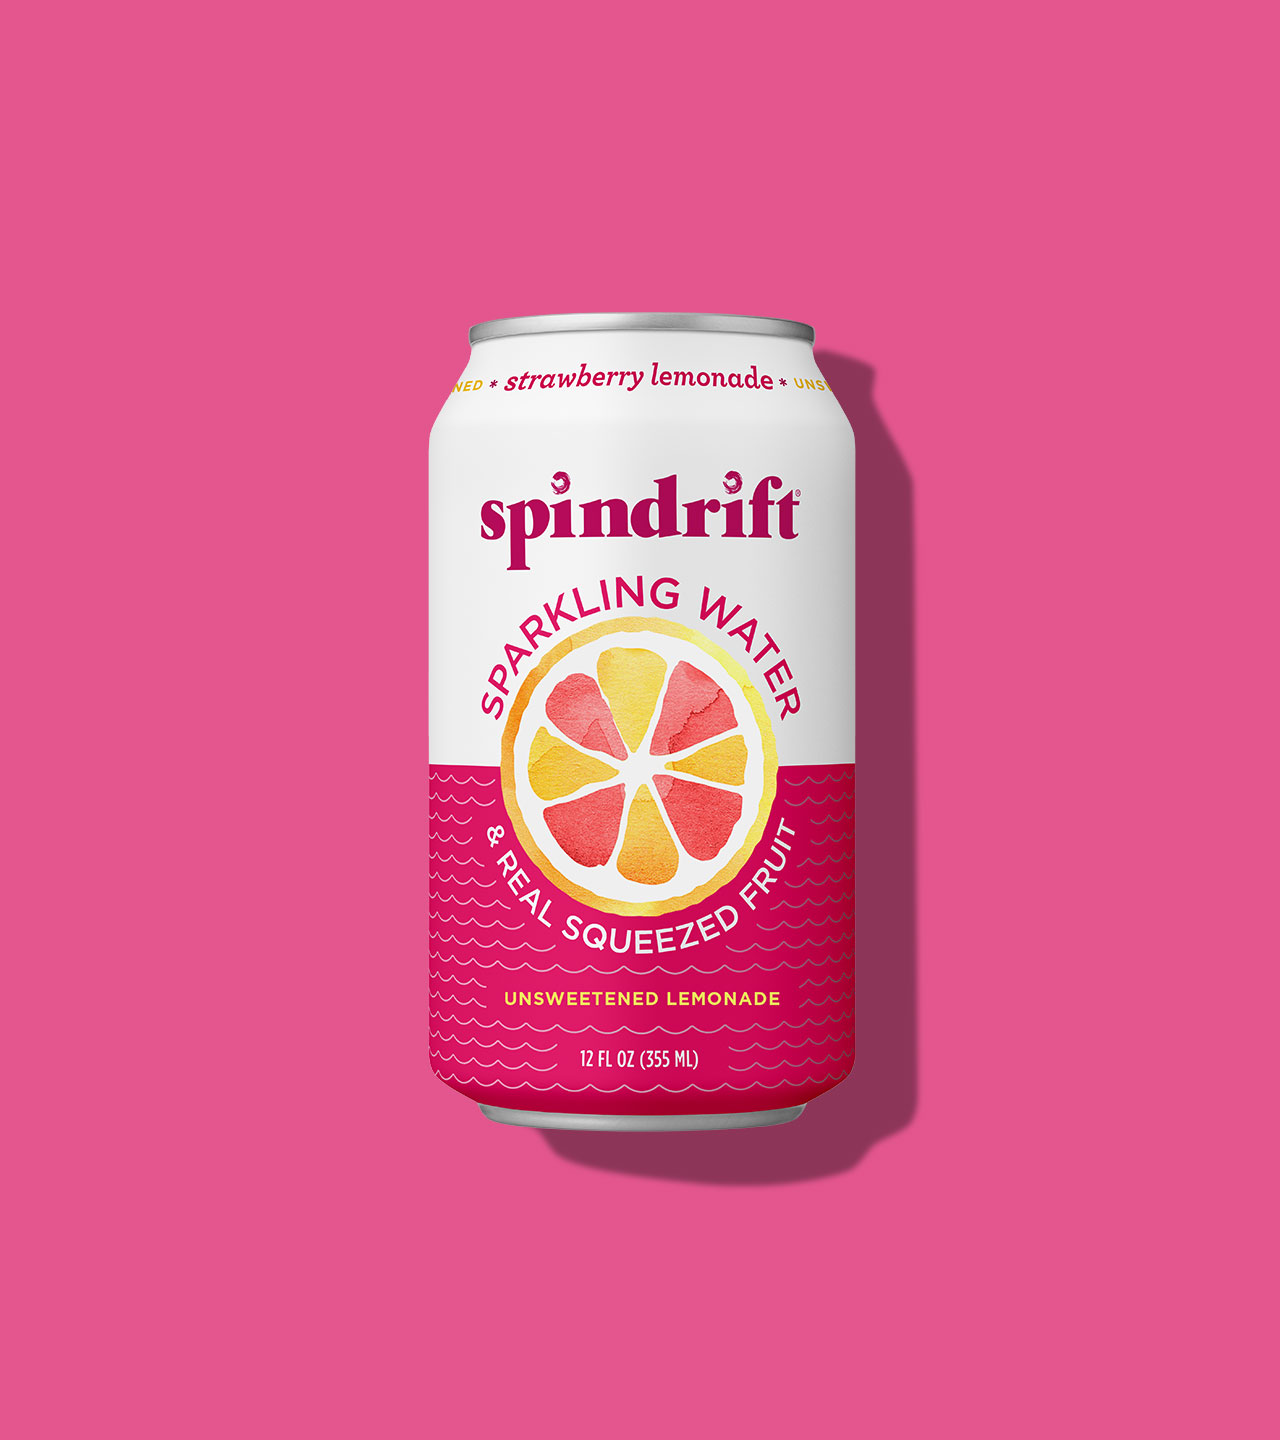 Spindrift Lemonade Packaging, Branding and Design by Colony